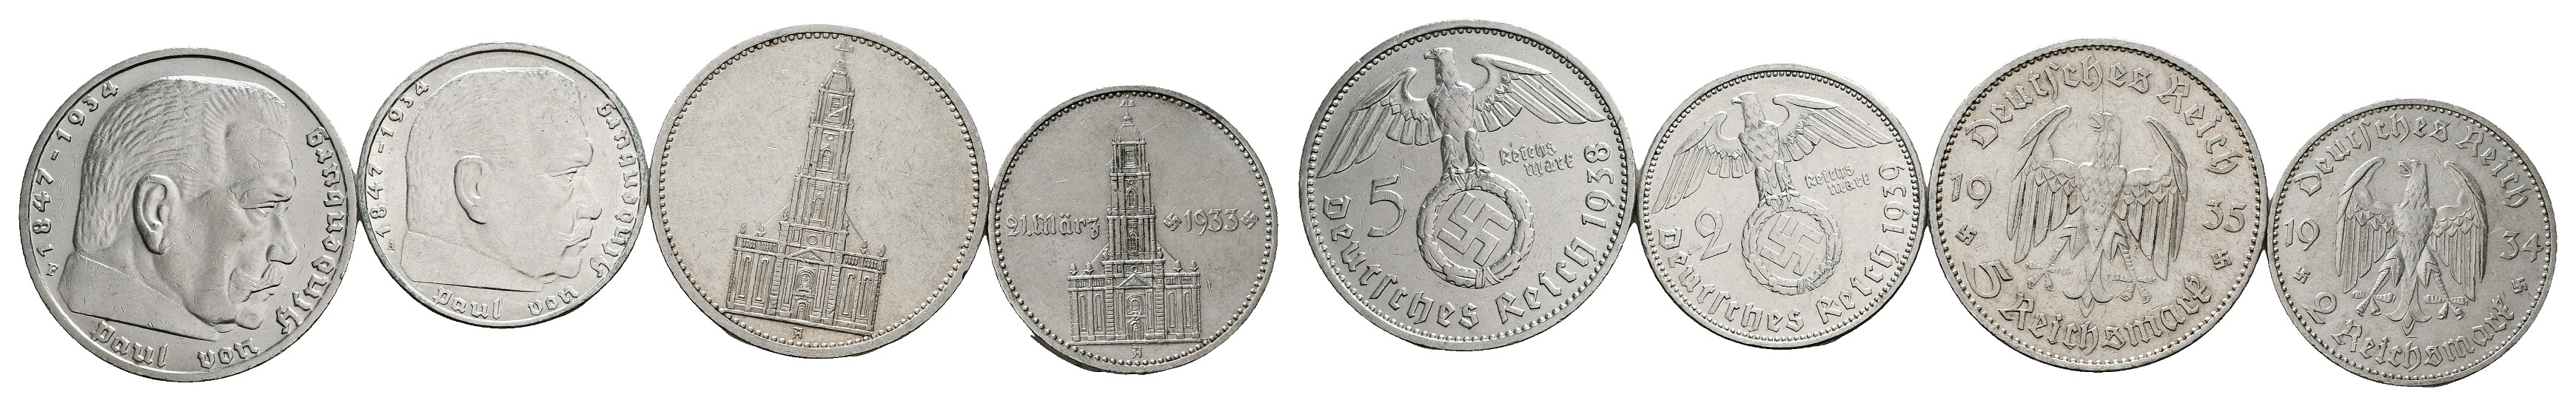  MGS Belgien 2,5 Euro mit Briefmarke vergoldet König Baudouin gekapselt   